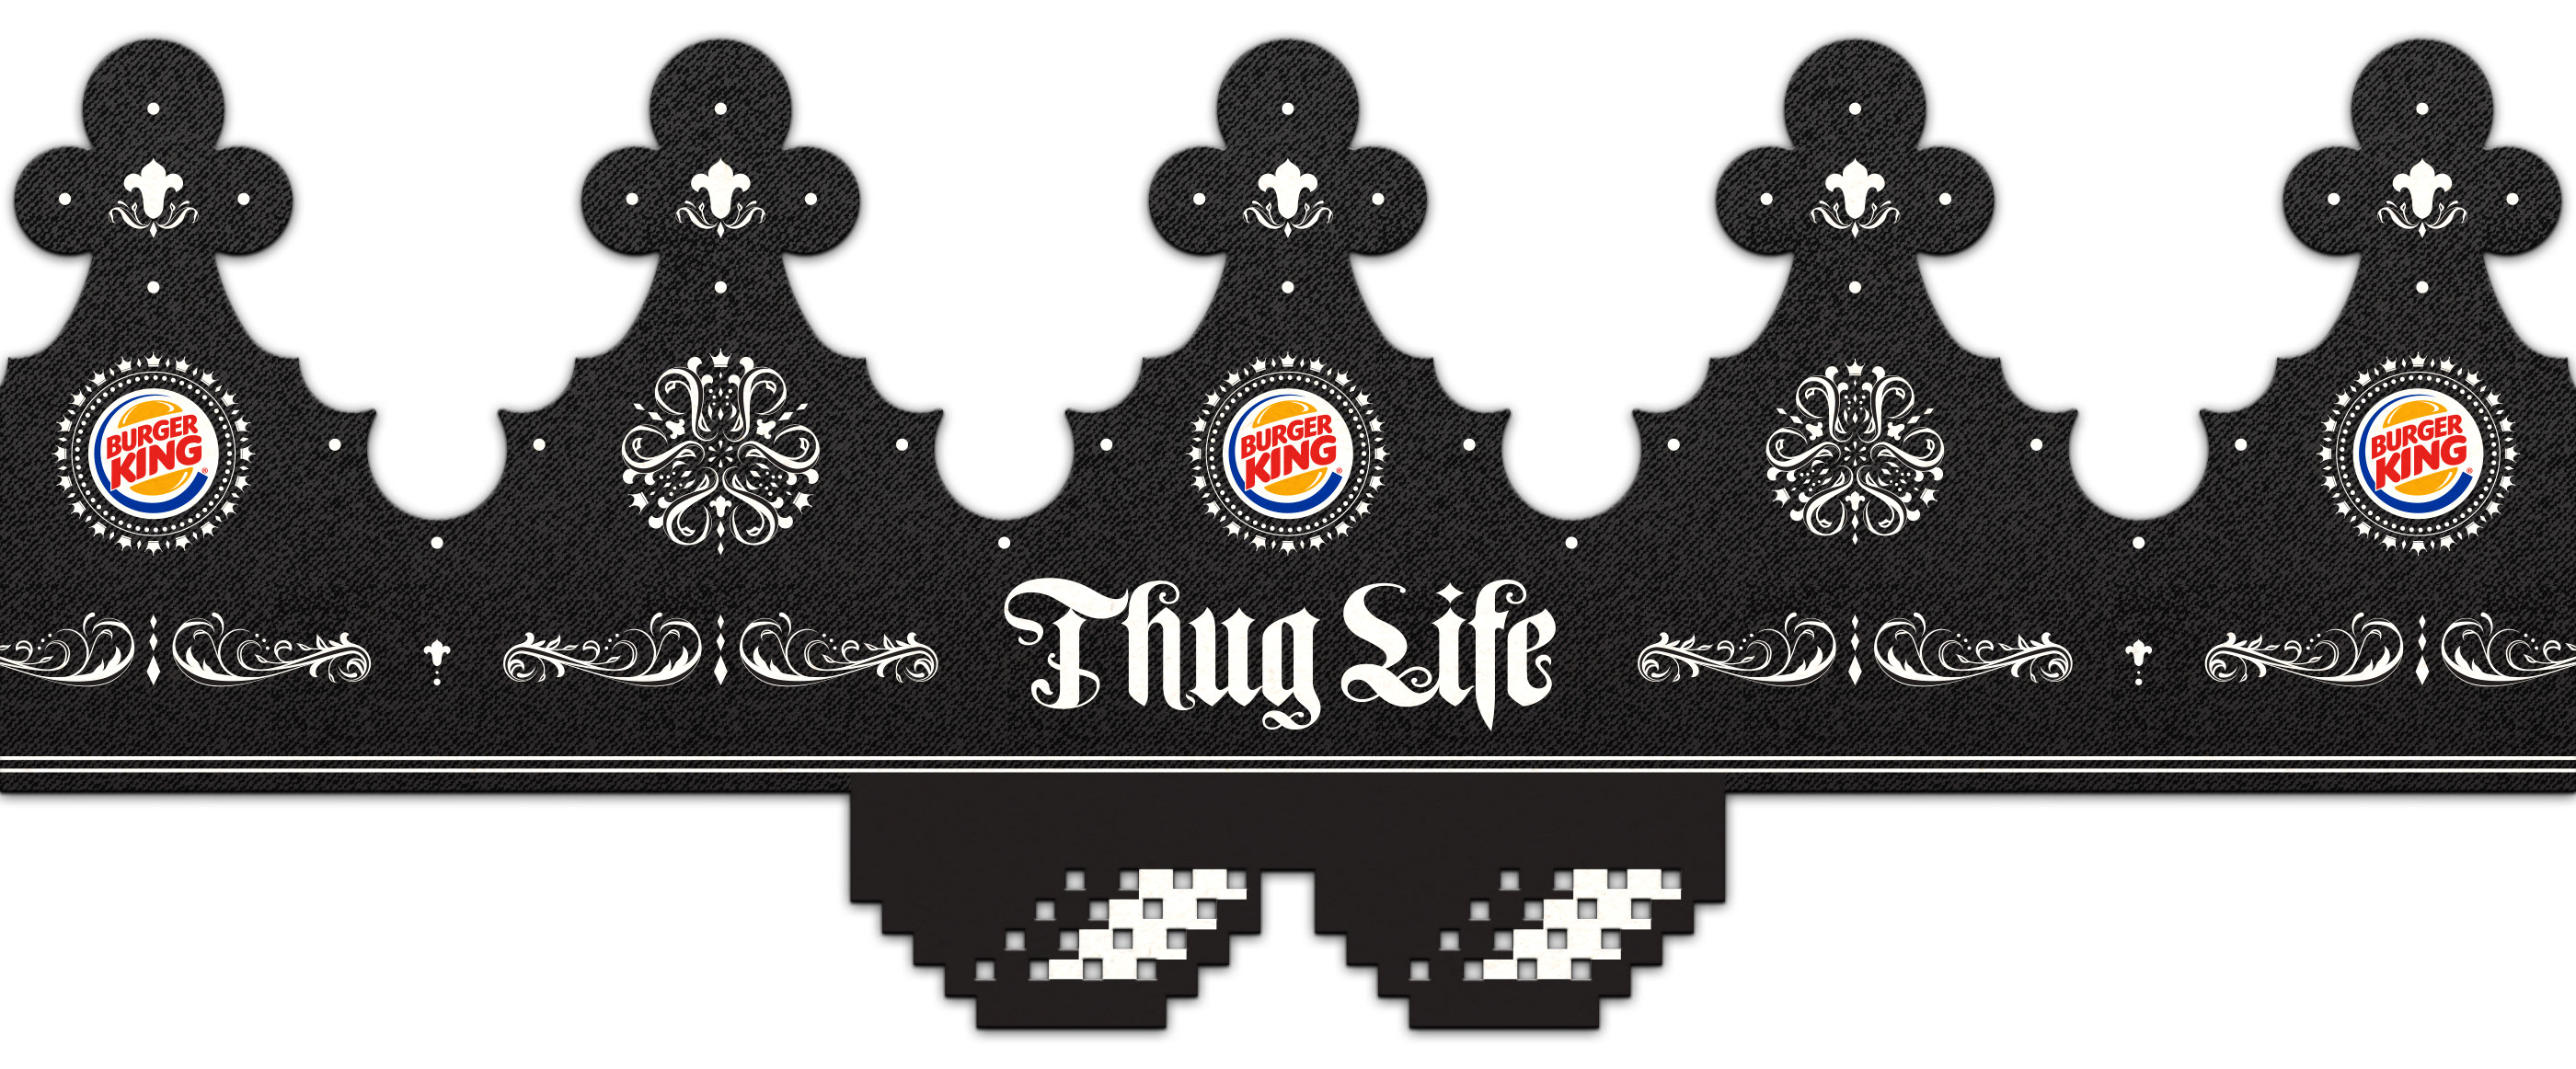 burger-king-crown-printable